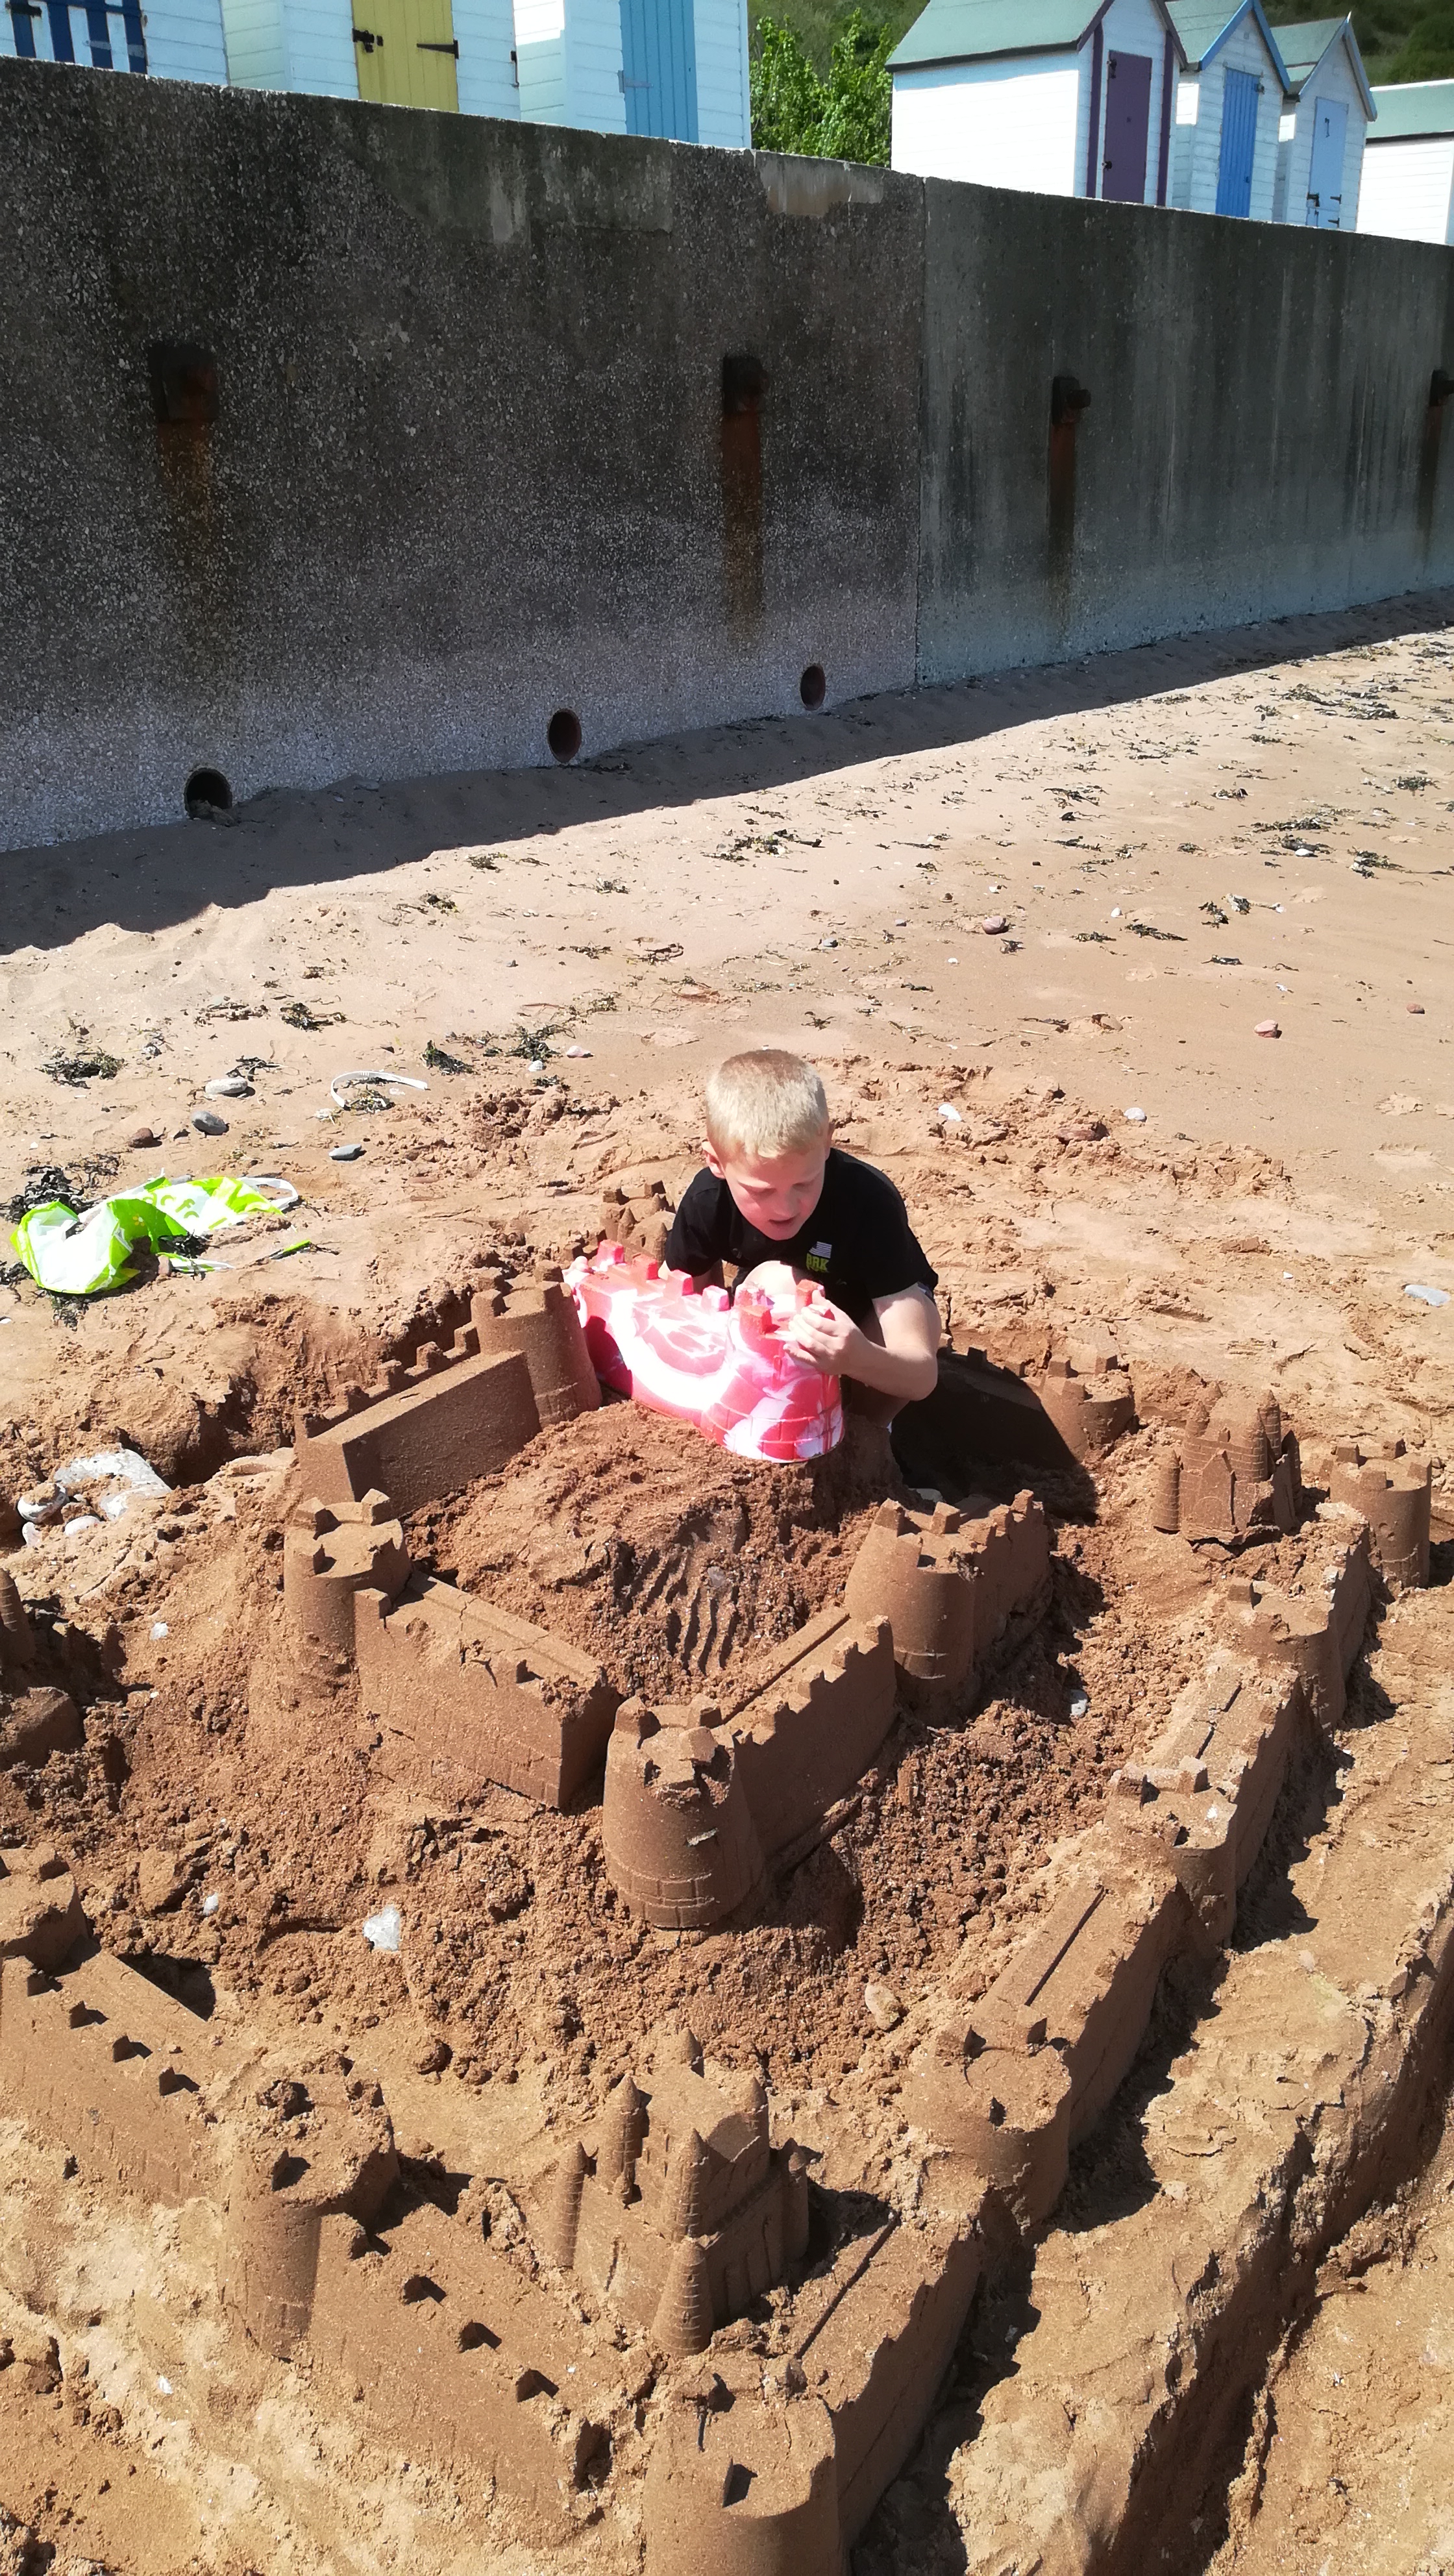 Building sandcastles